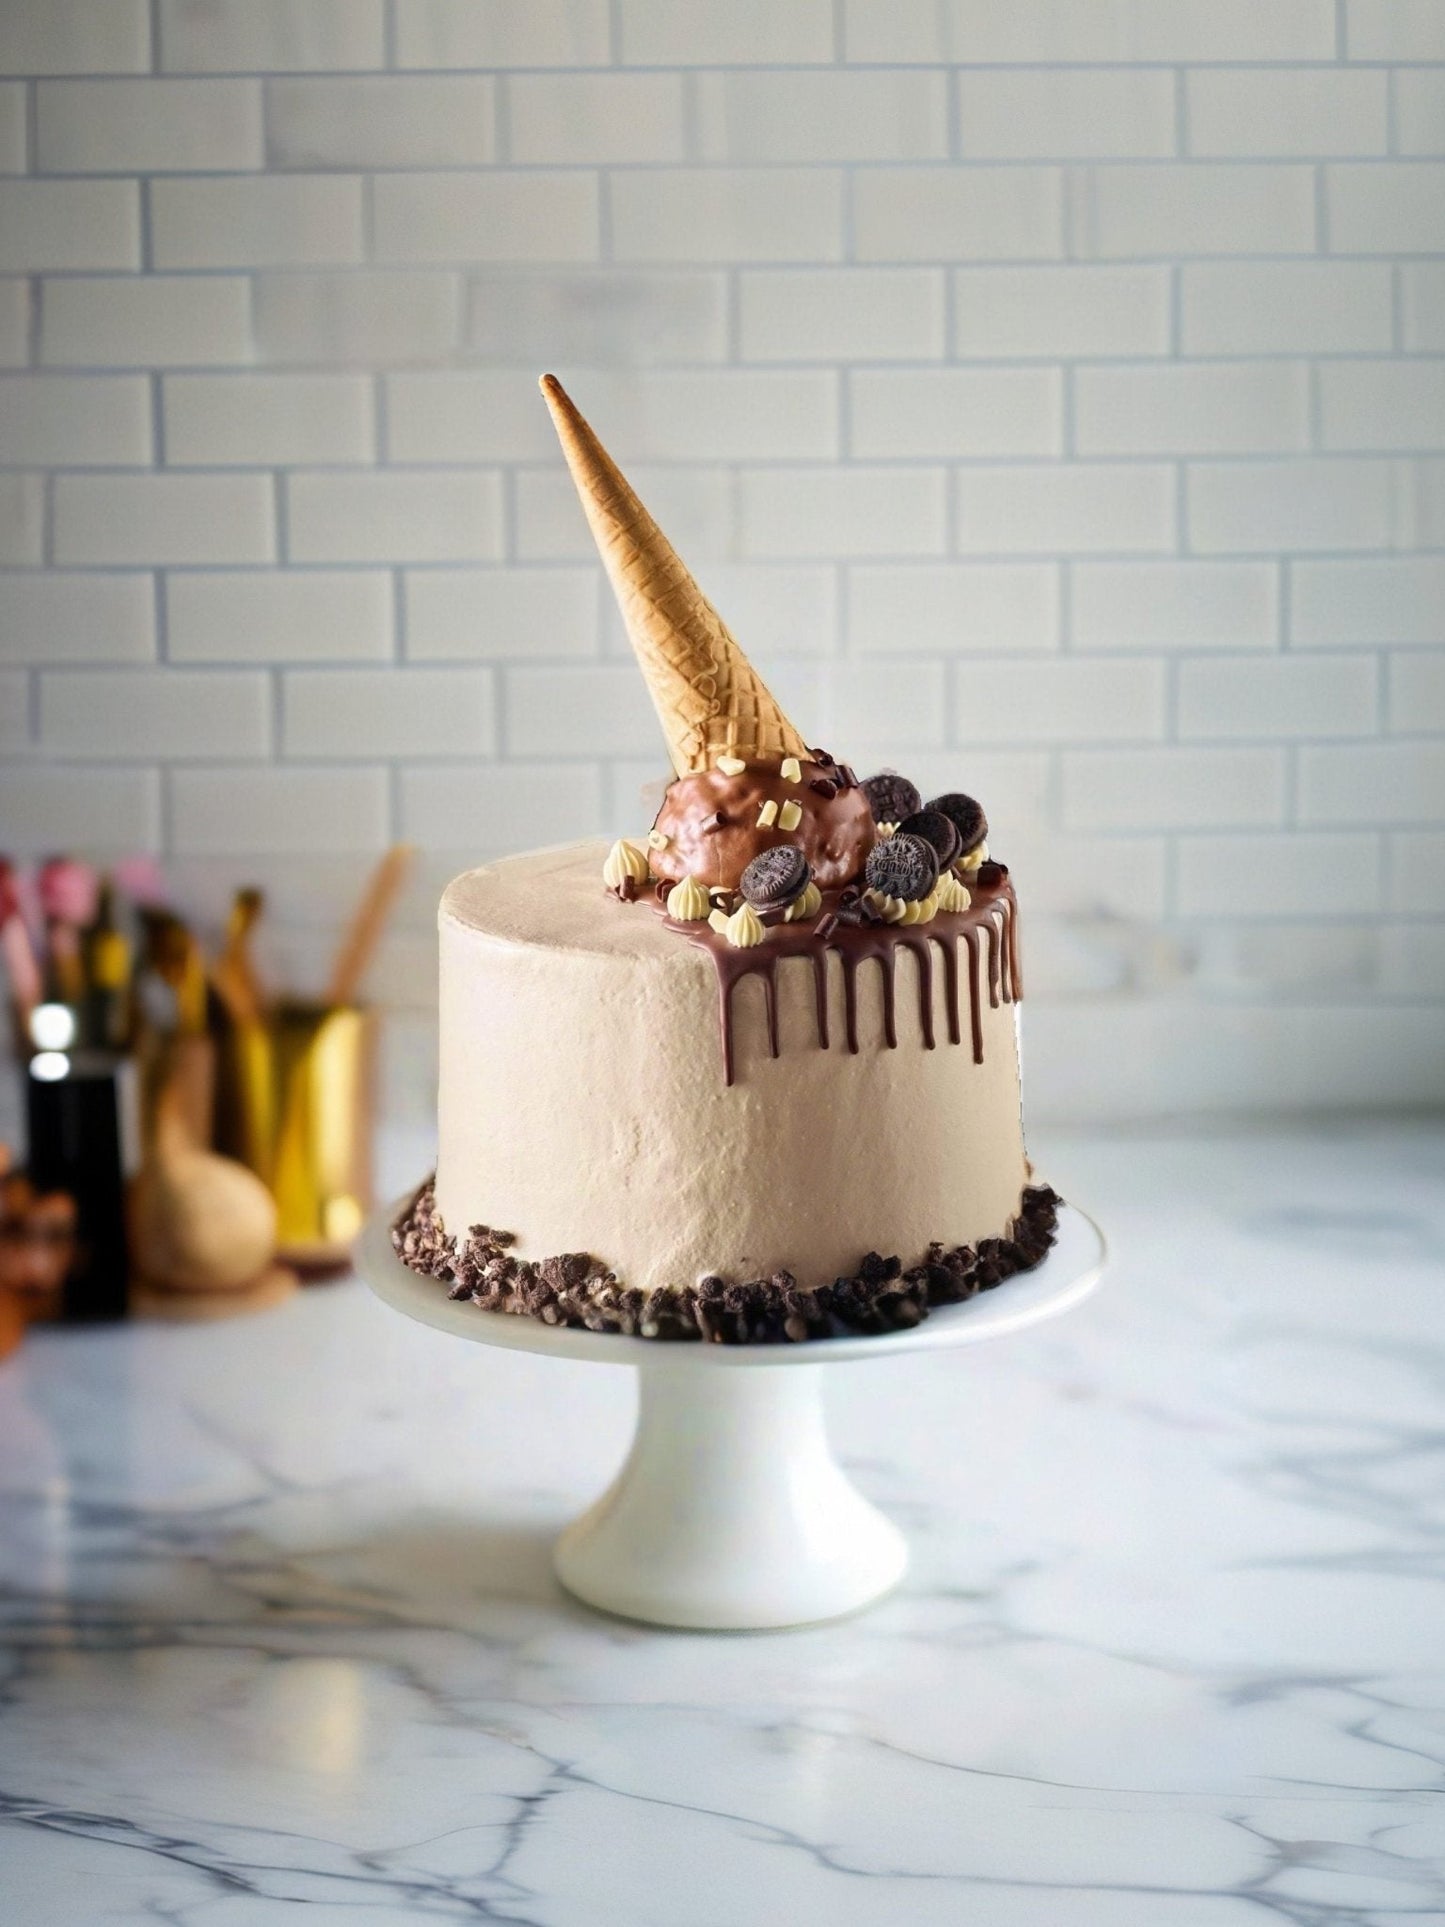 21st Birthday Cake Bundle - Cookies & Cream Ice Cream Cone Drip Cake - Patisserie Valerie